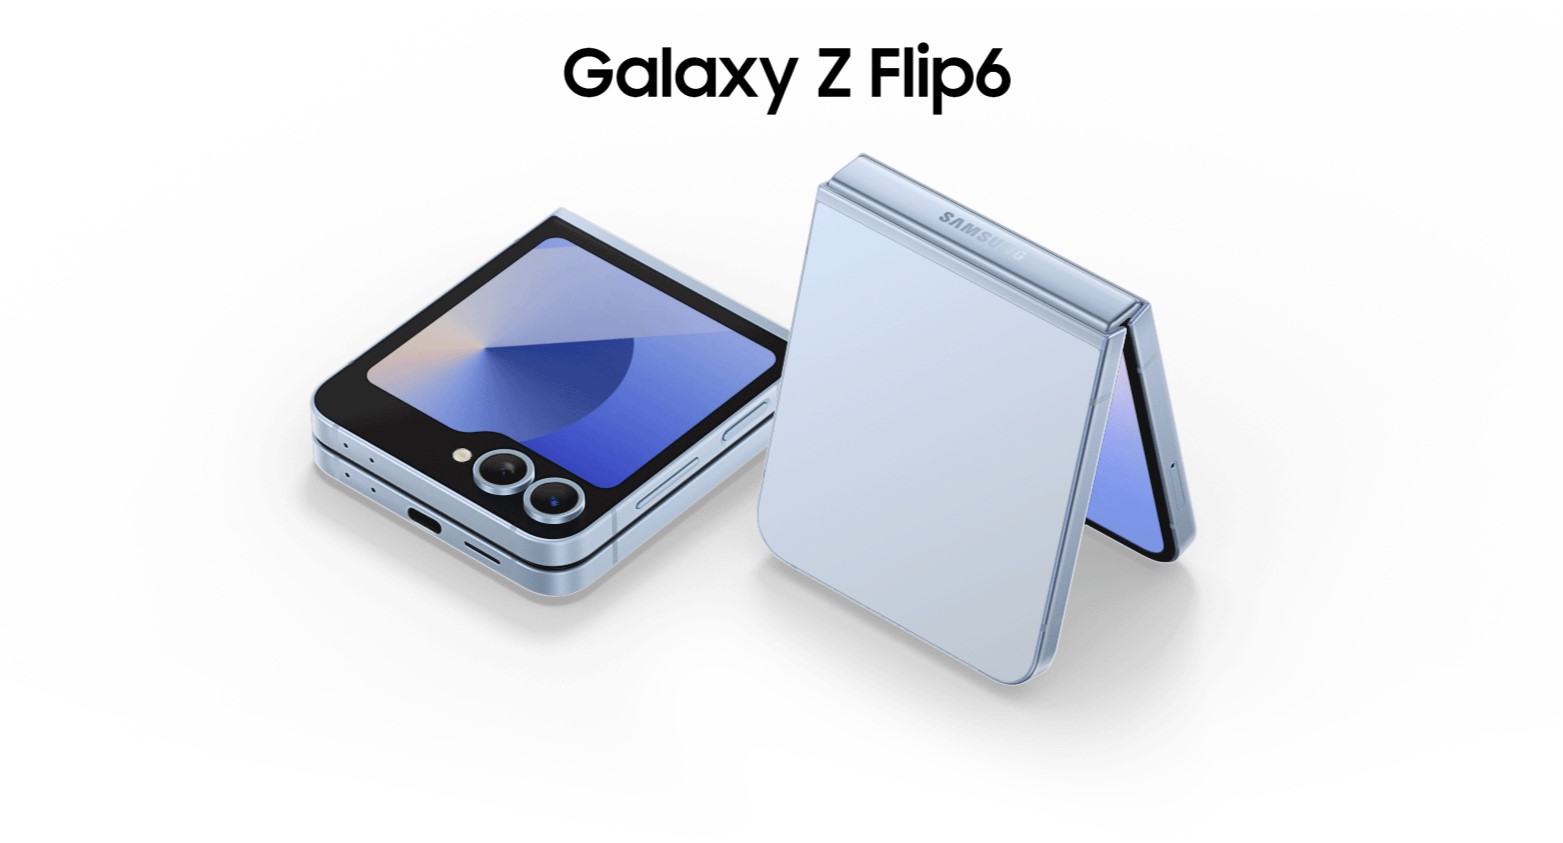 Samsung Galaxy Z Flip6: Flip smartphone empowered and enhanced by AI